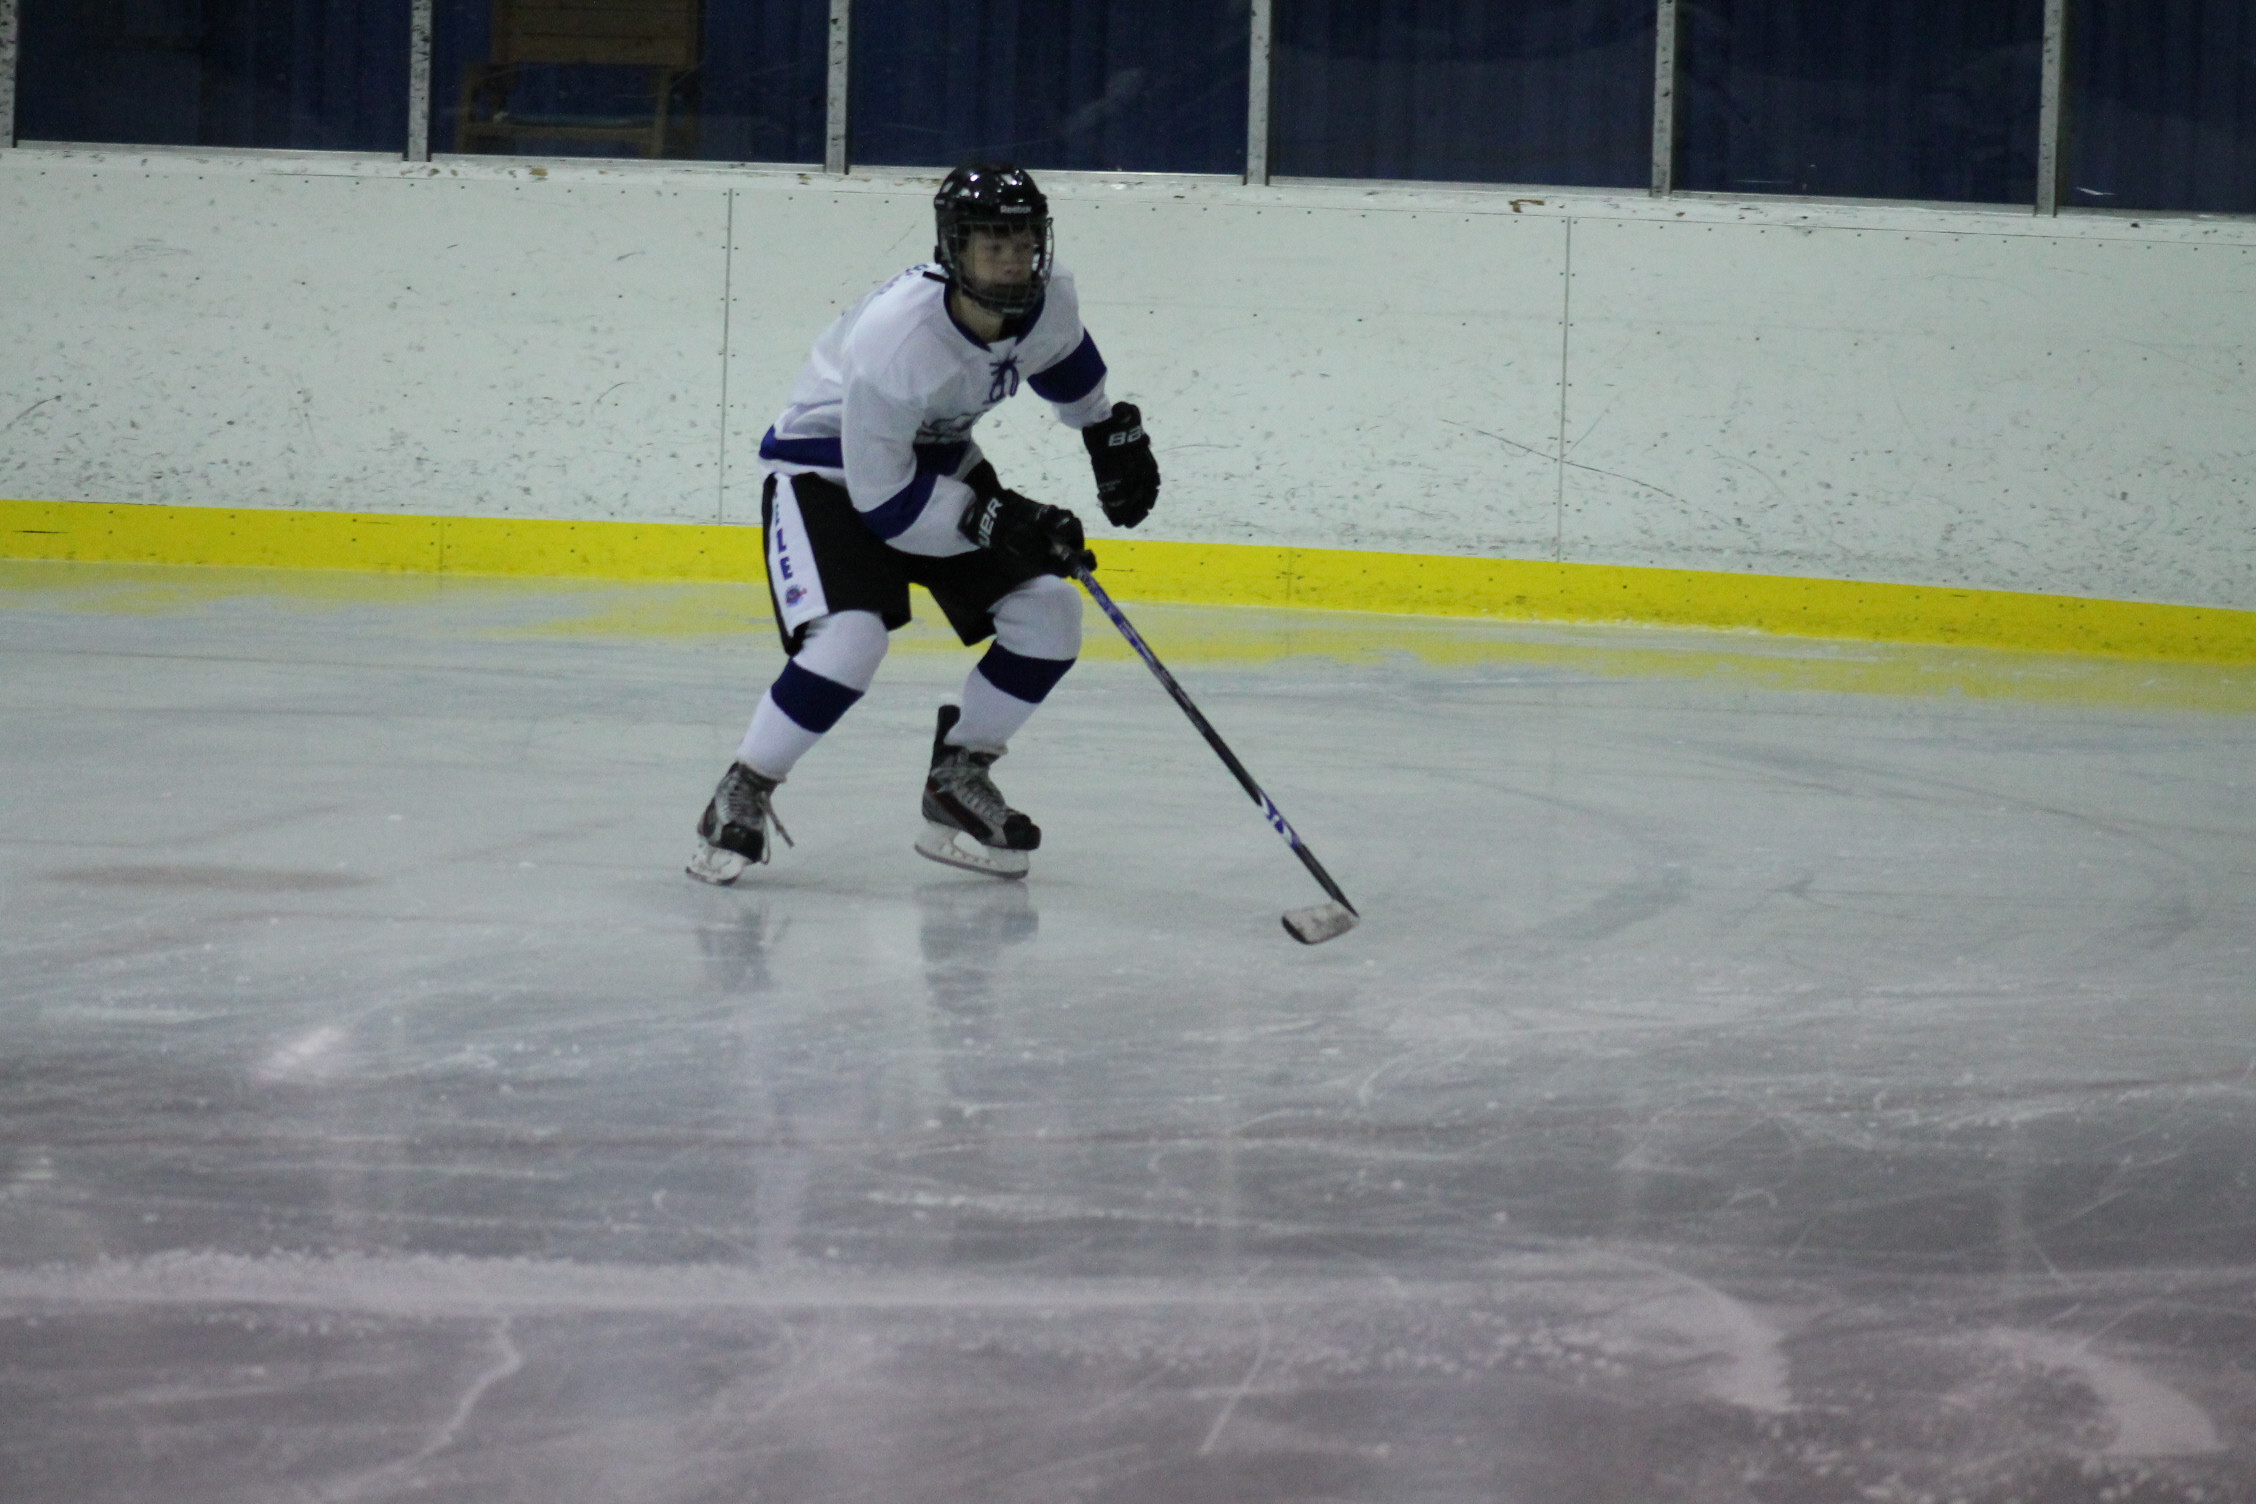 a man wearing a hockey uniform skating on an ice rink